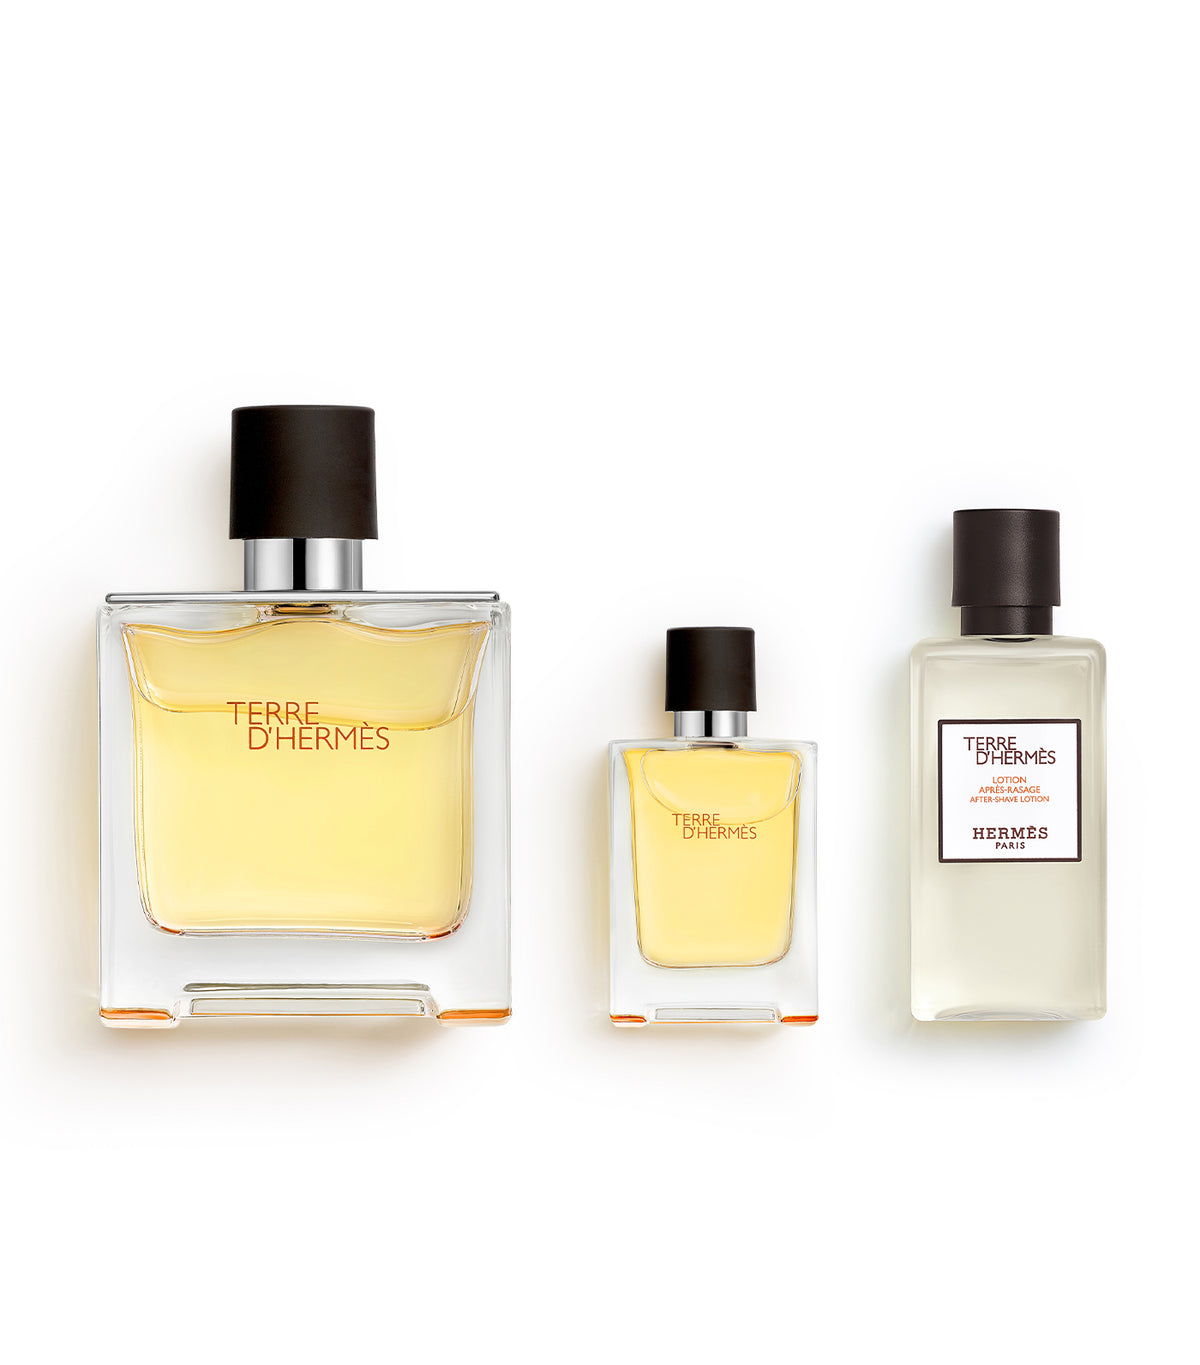 HERMÈS Terre d'Hermès gift set, Parfum, 75ml + 12.5ml + 40ml